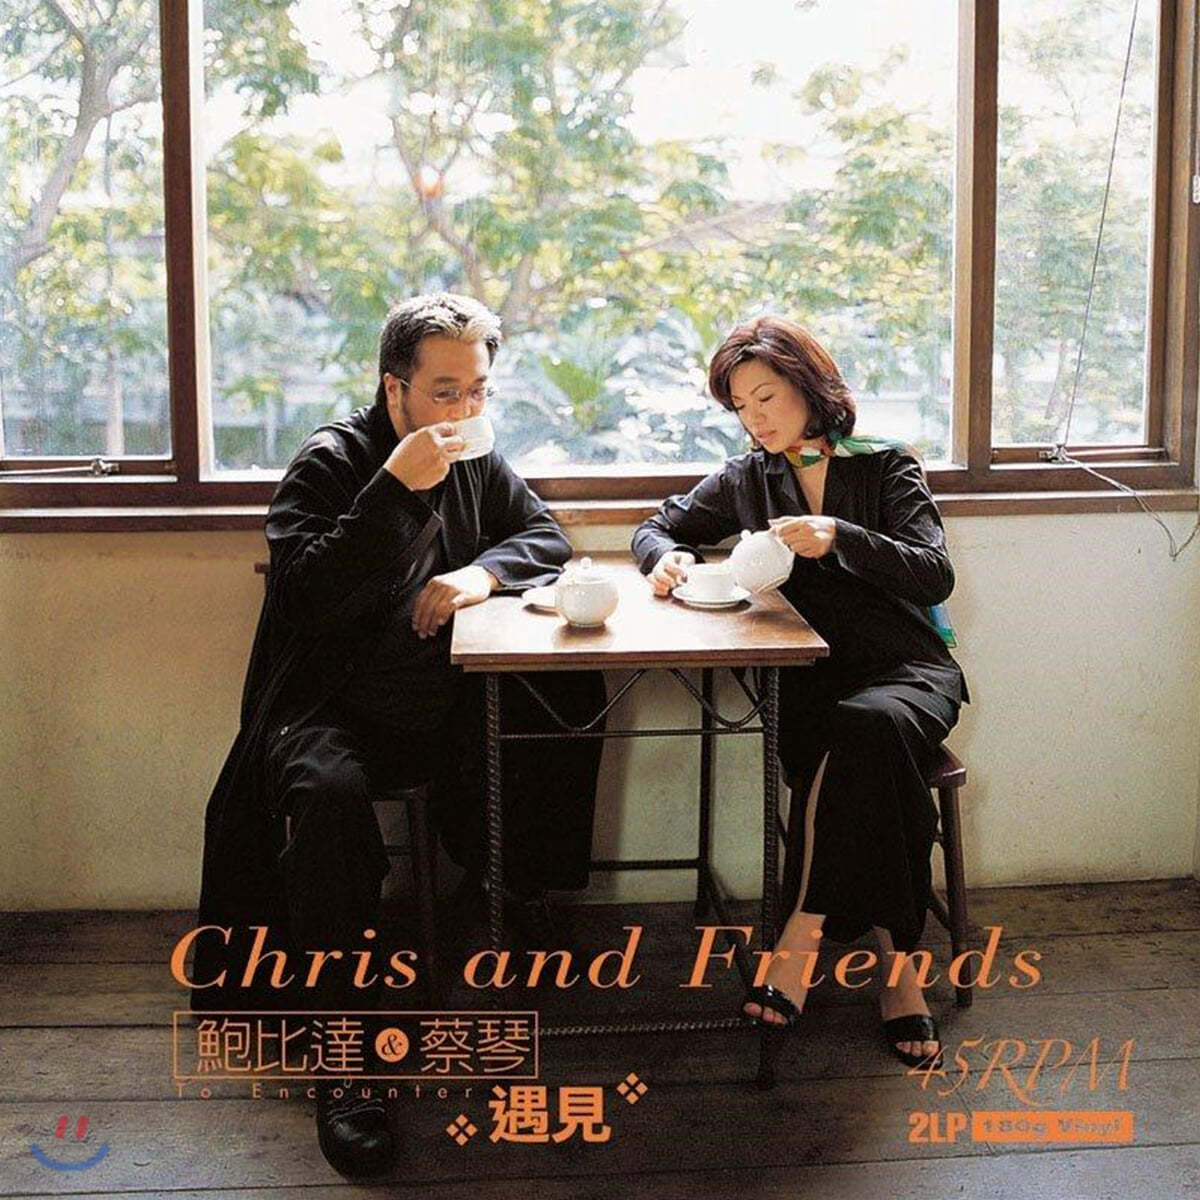 Tsai Chin (채금) - Chris and Friends: To Encounter [2LP]